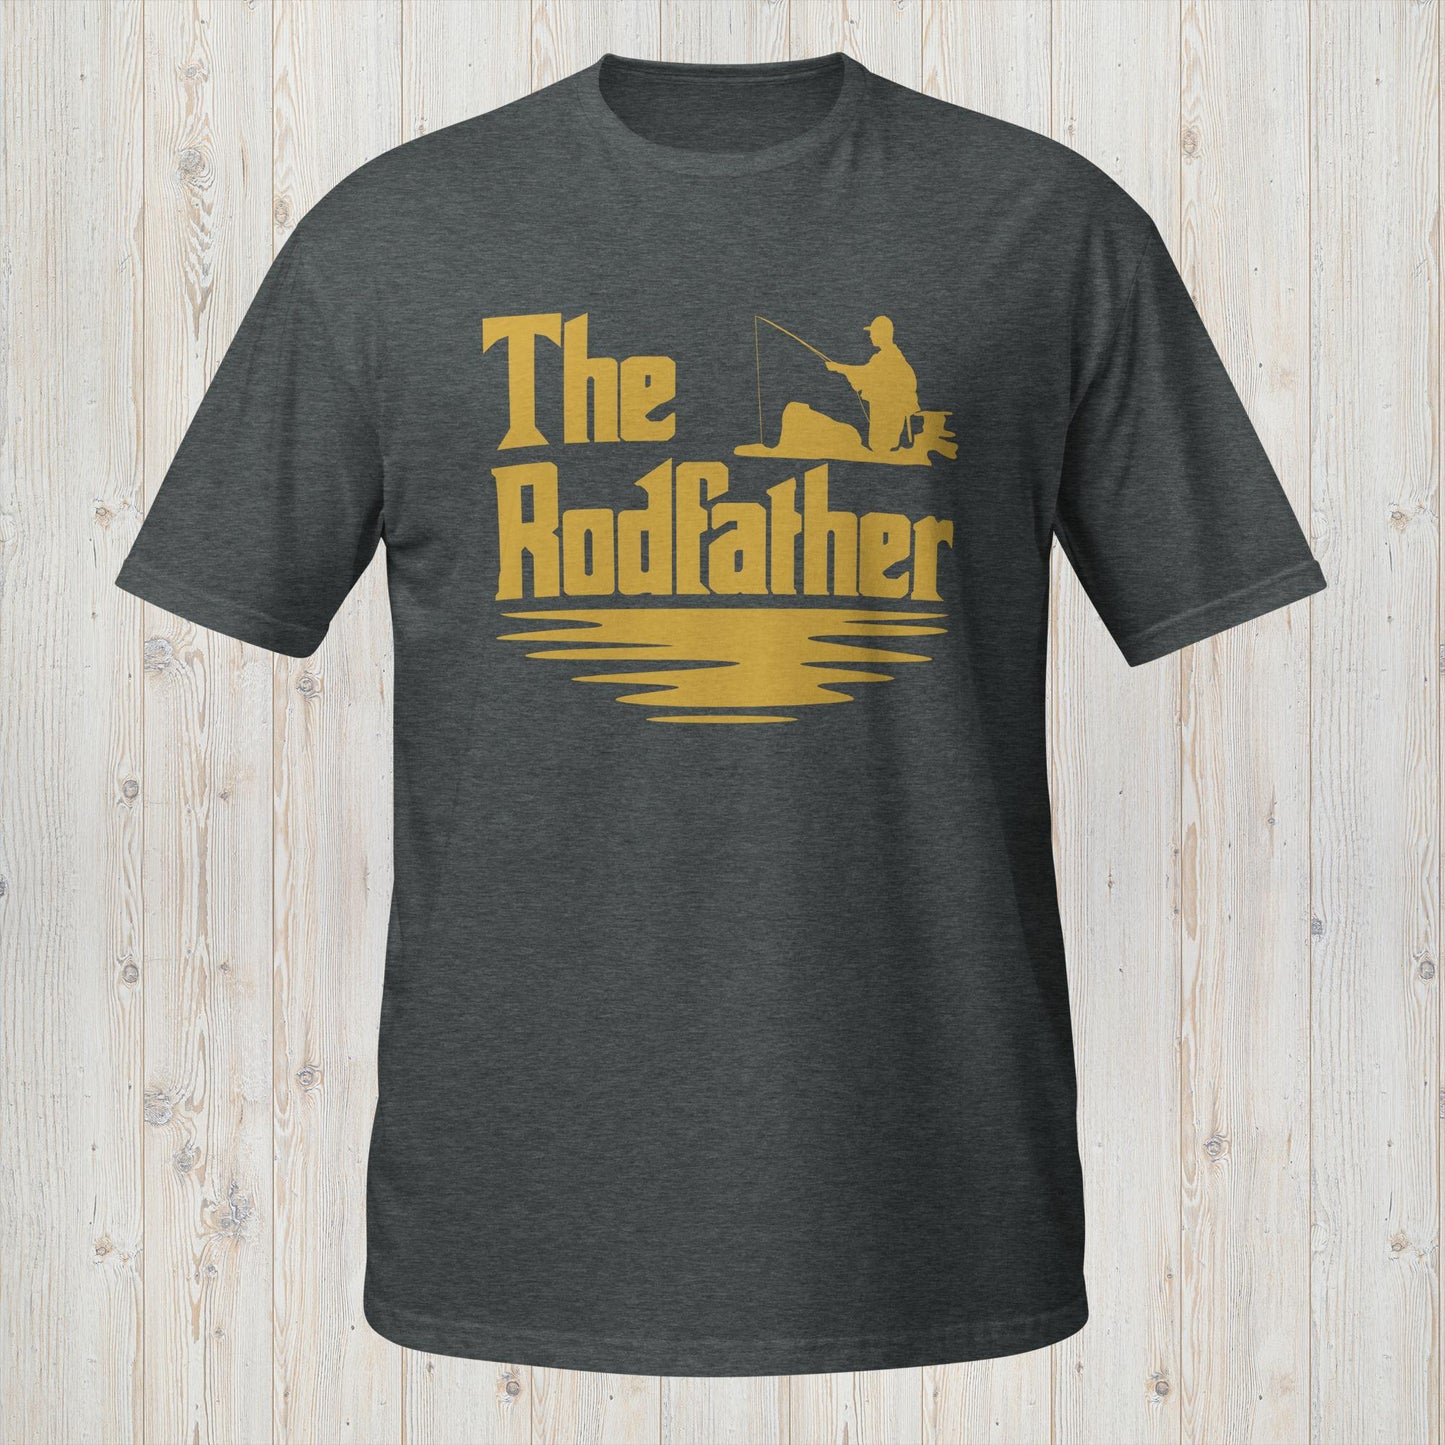 The Rodfather Tee - Fishing Enthusiast Shirt with Mafia Flair